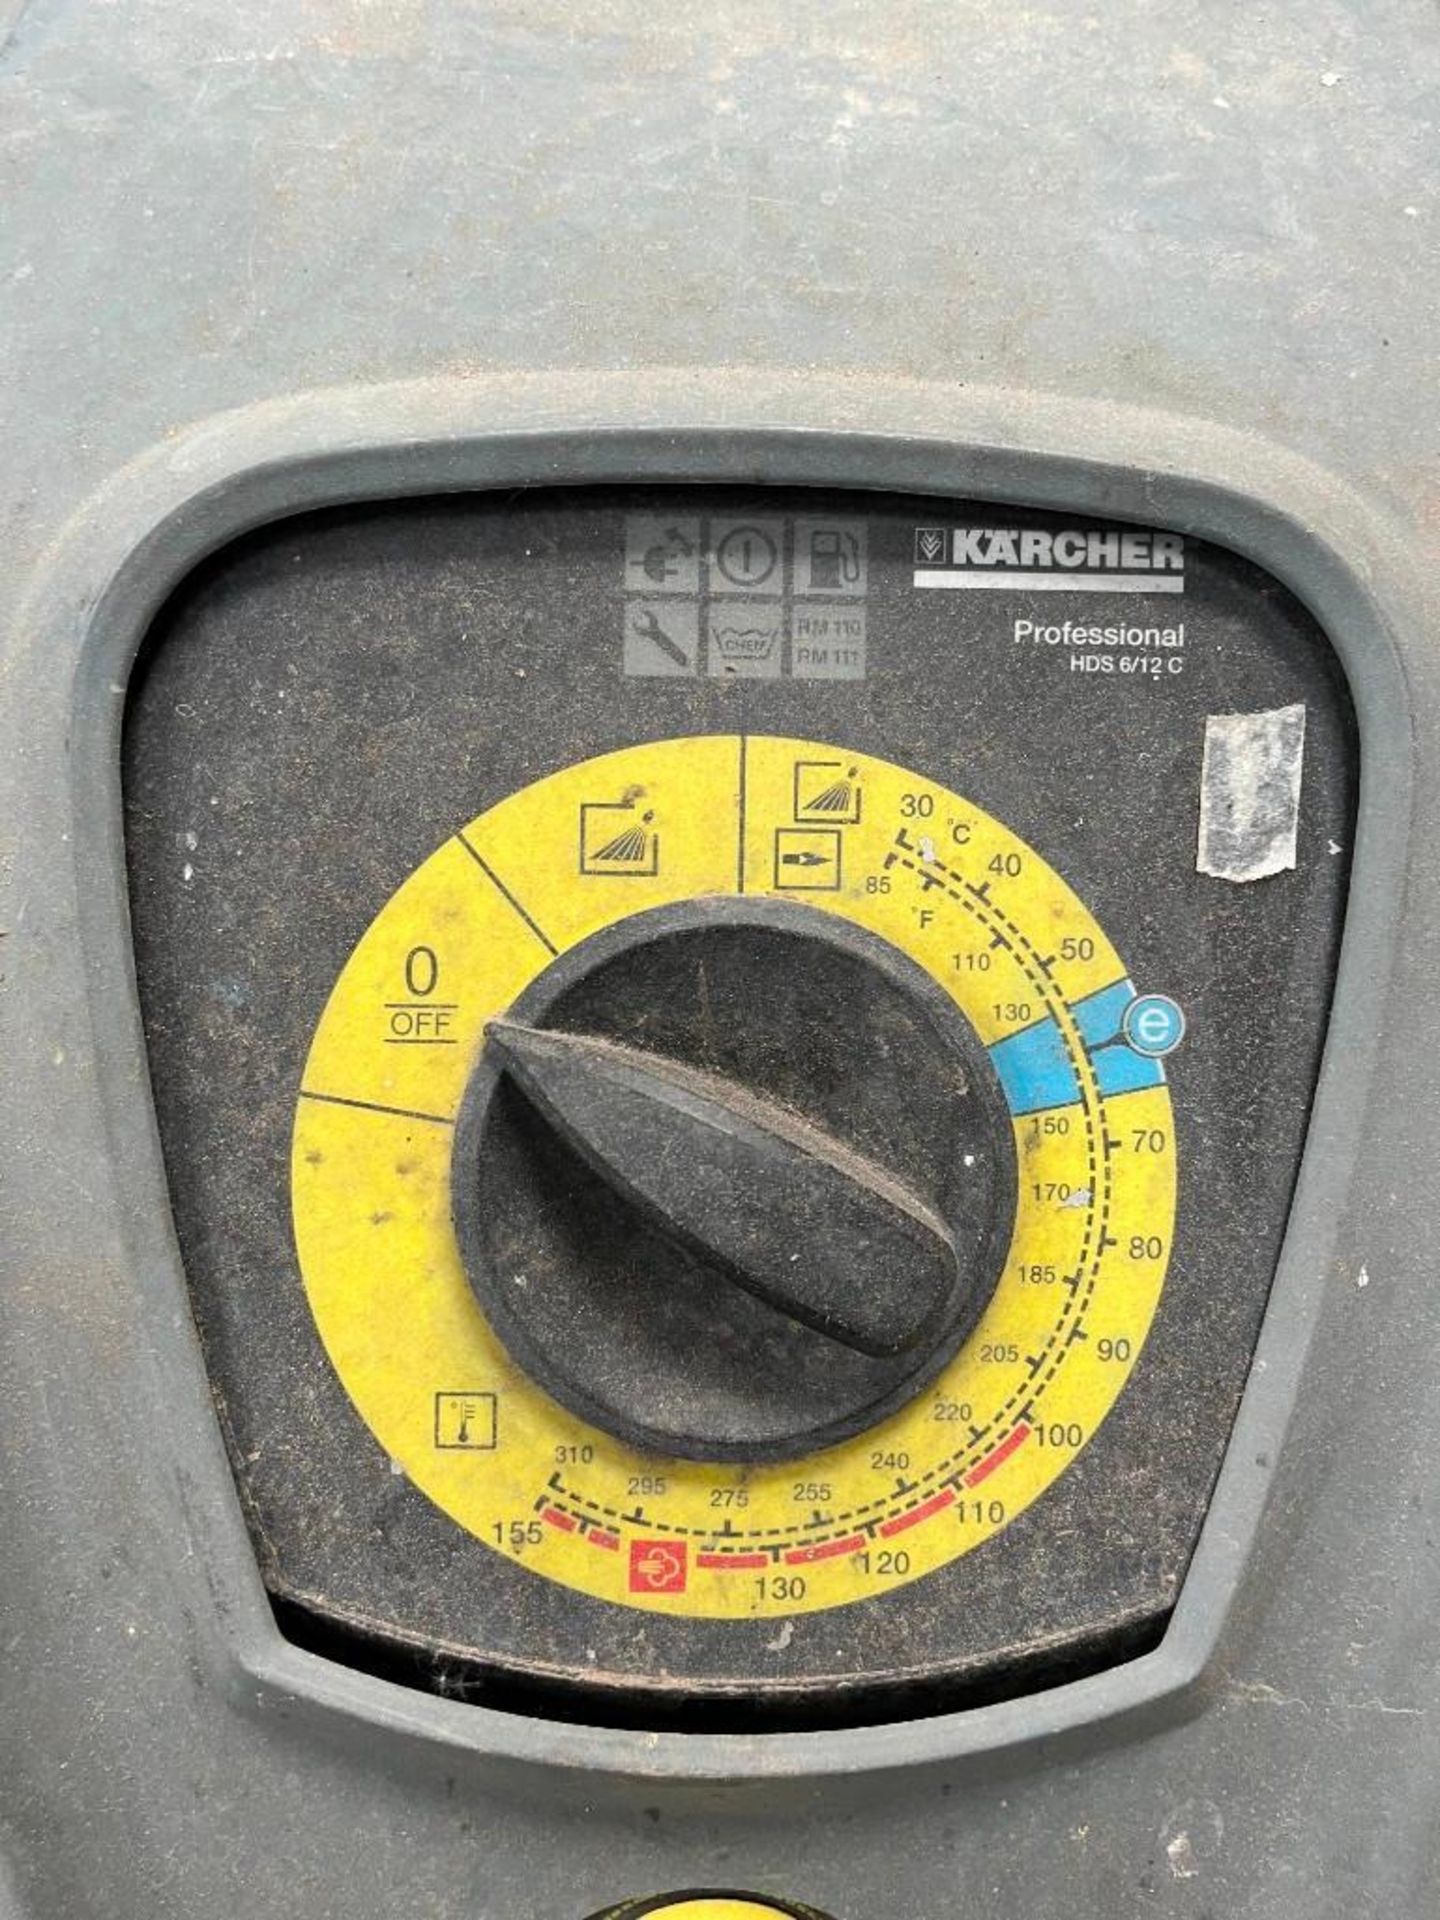 Karcher Professional HDS 6/12 C Hot Water Pressure Washer - (Norfolk) - Image 4 of 4